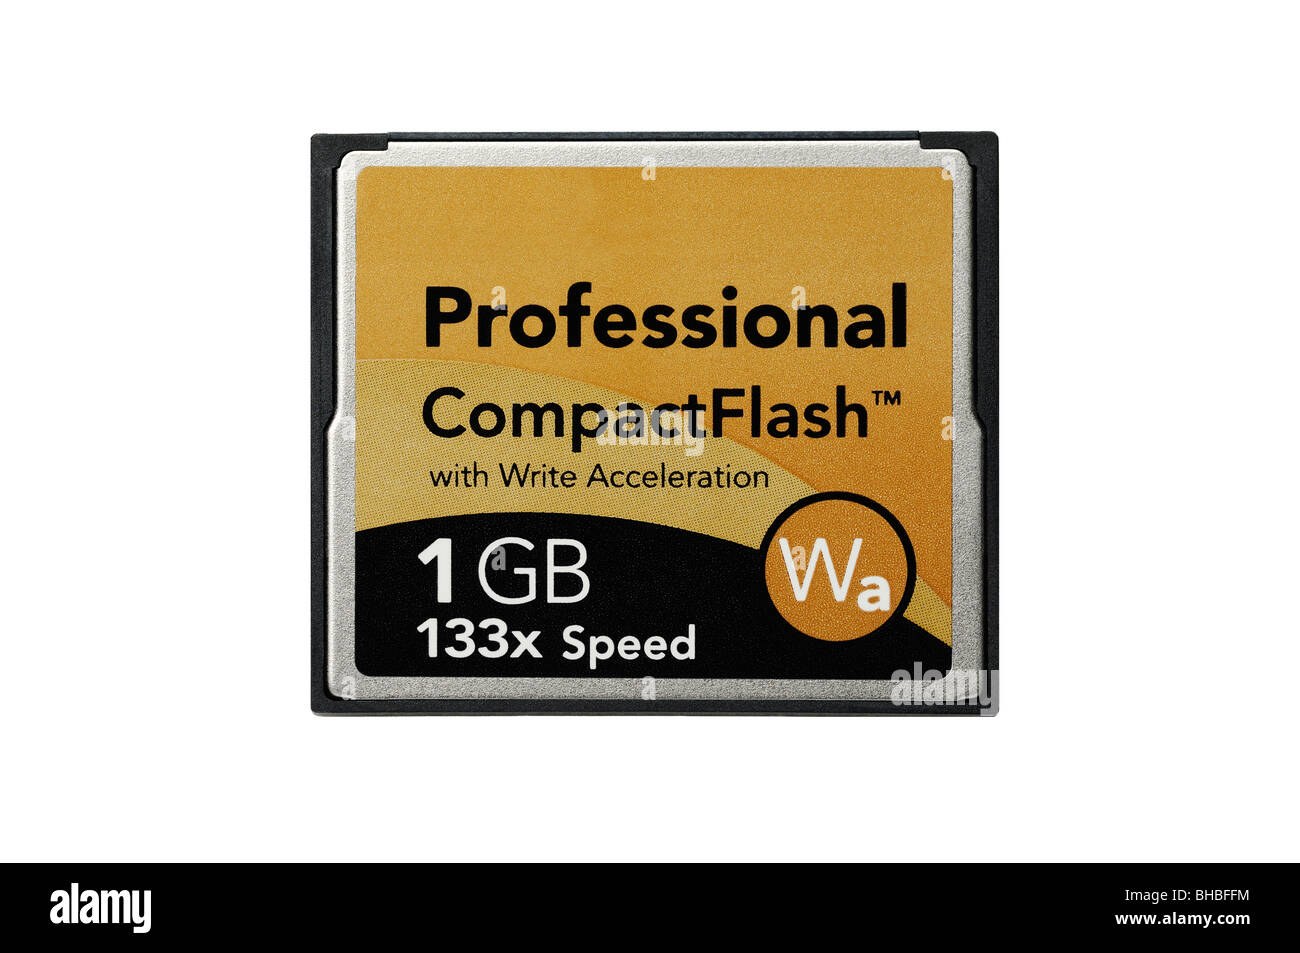 Compactflash Memory Card Stock Photo